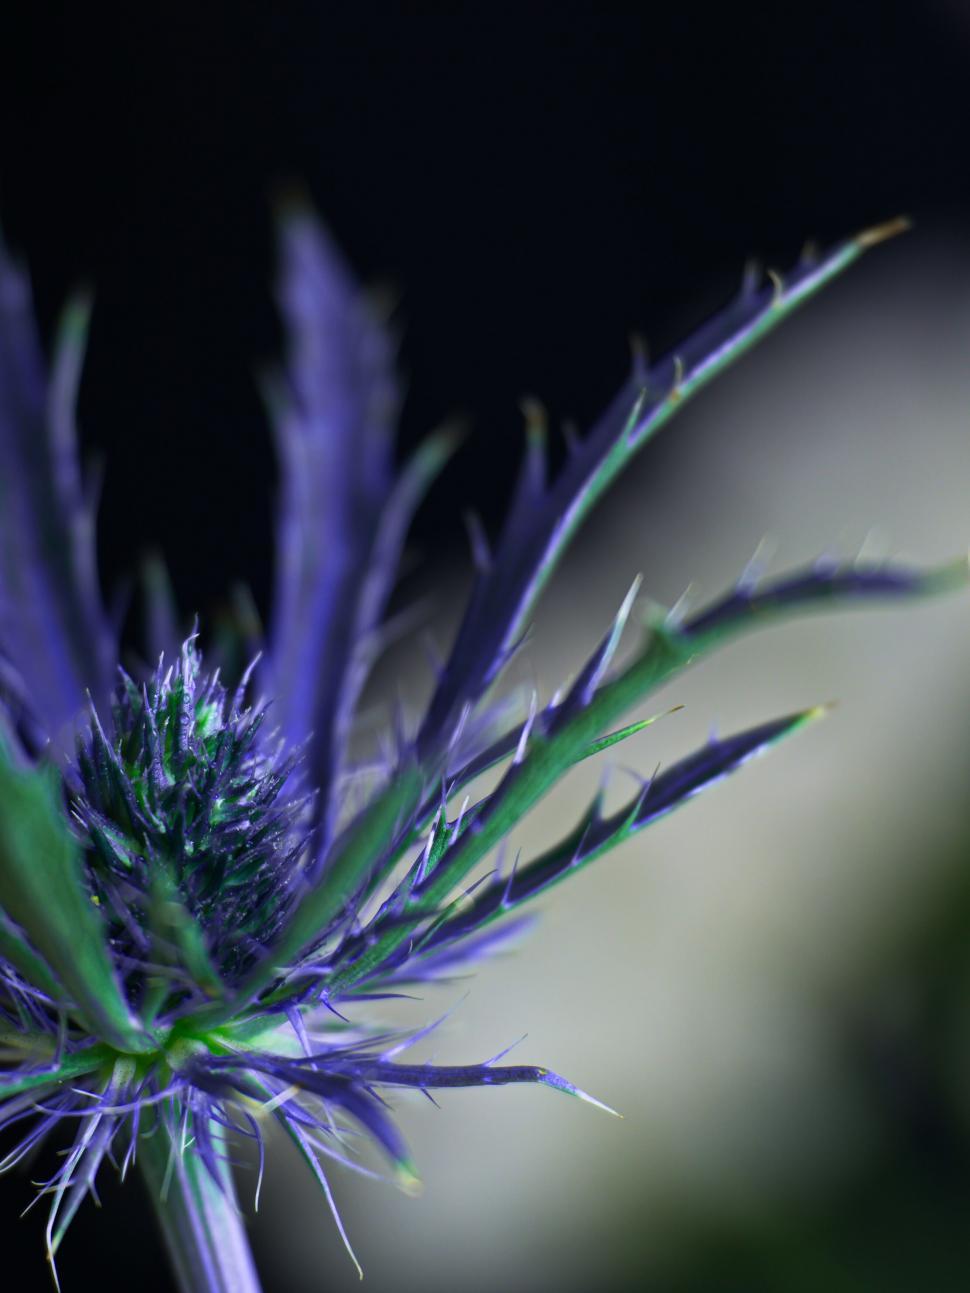 Free Image of Vivid blue thistle flower against dark backdrop 